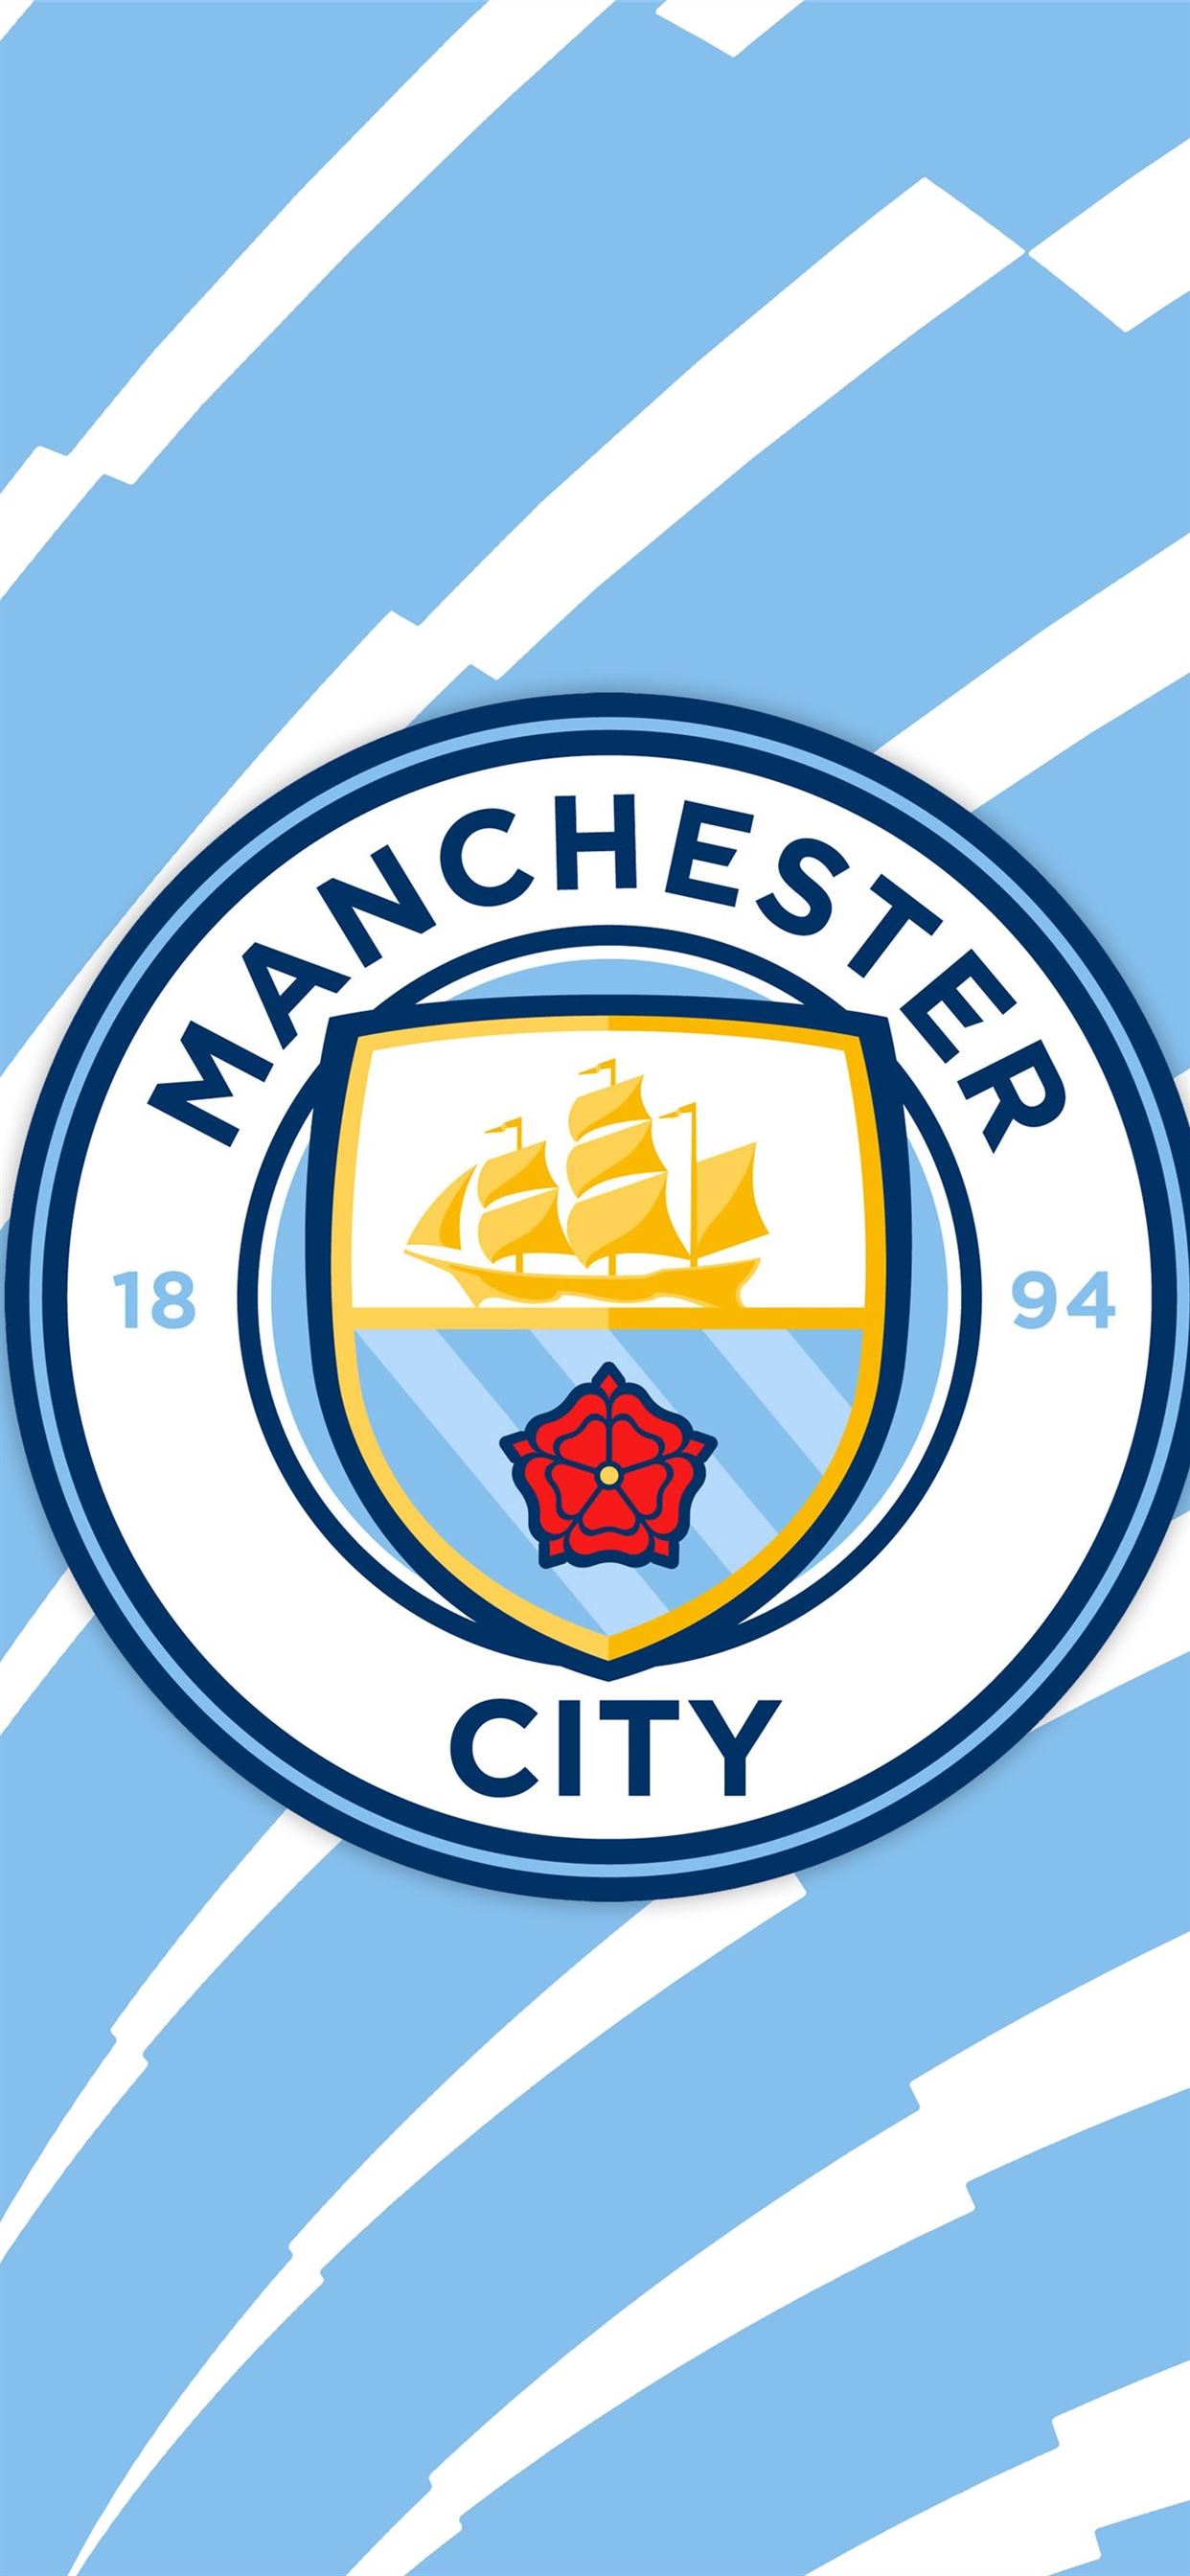 Manchester city premier league hd desktop bac iphone wallpapers free download